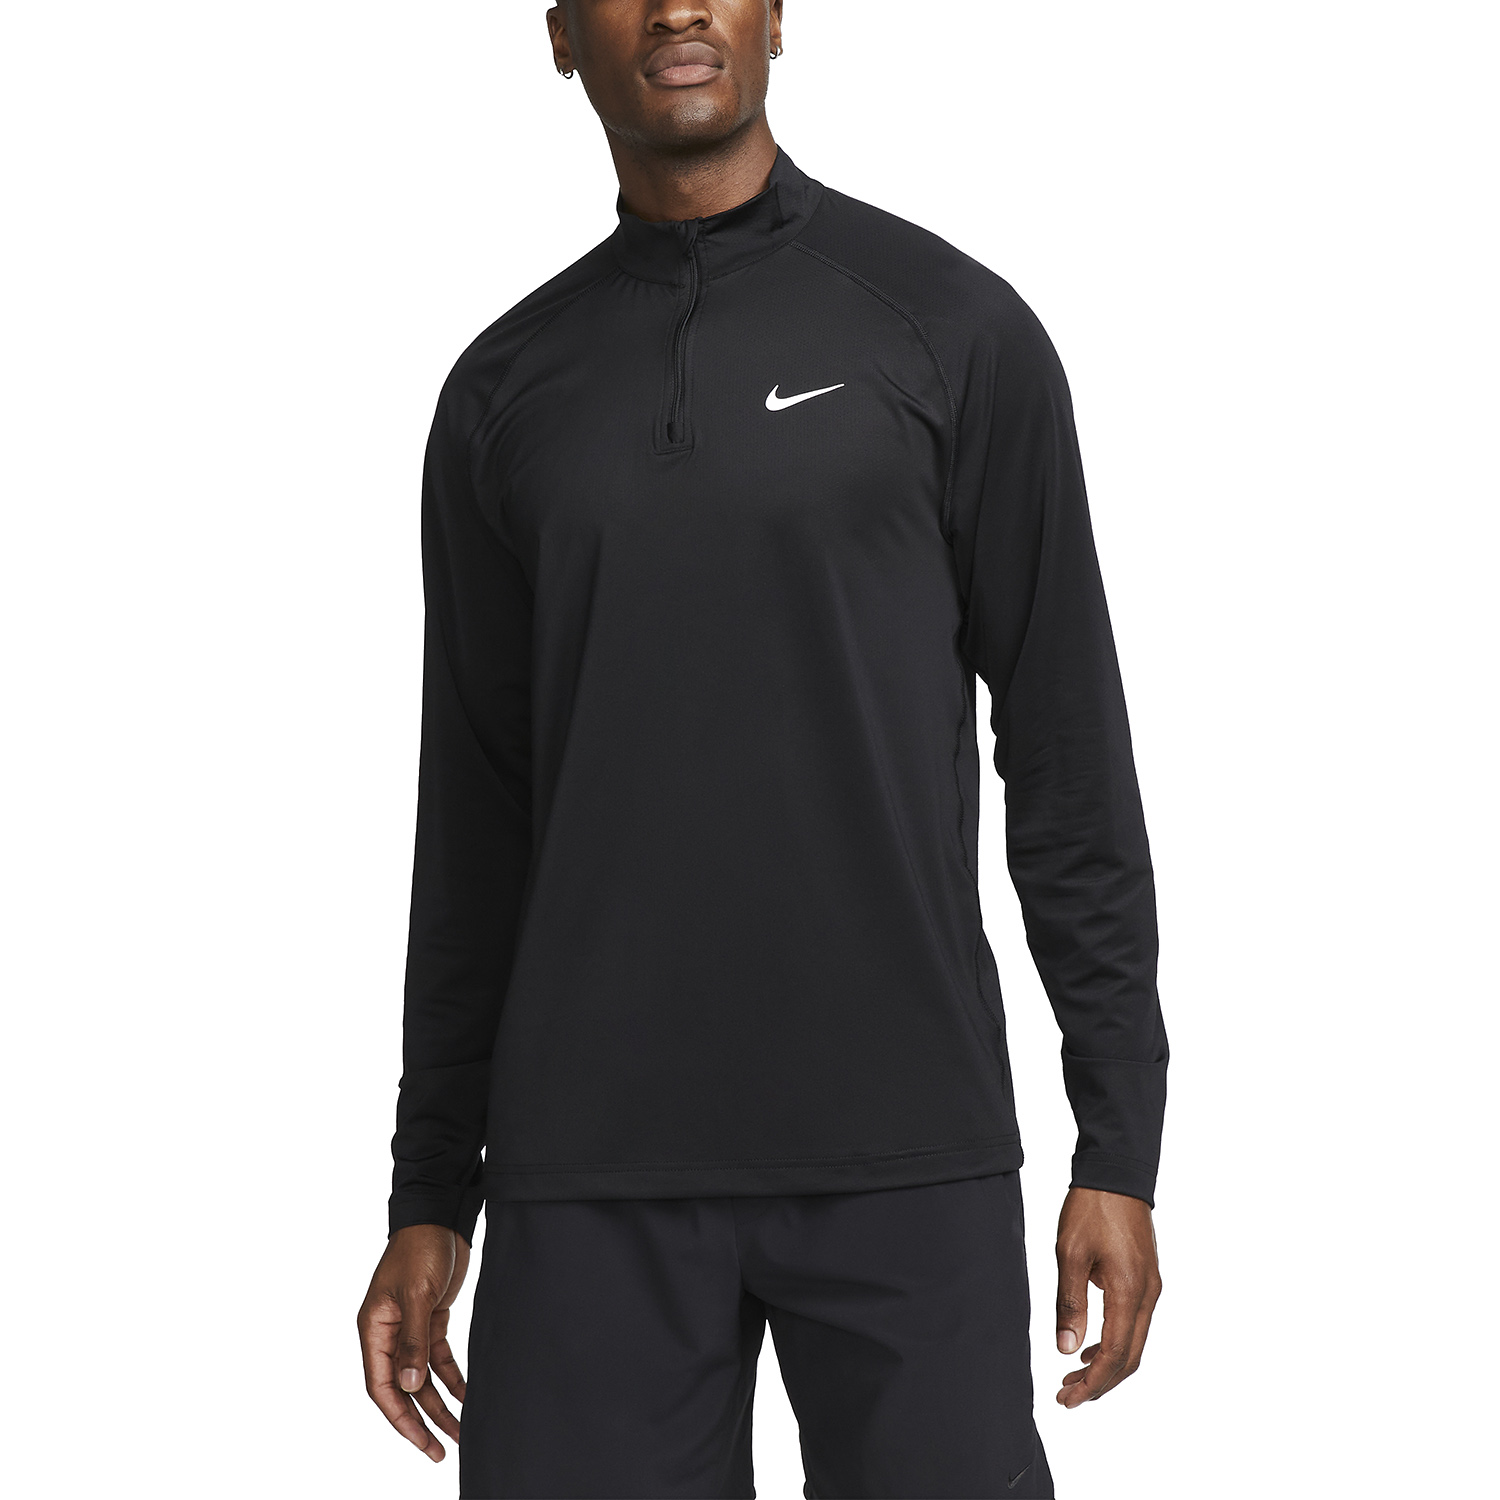 Nike Ready Camisa - Black/White